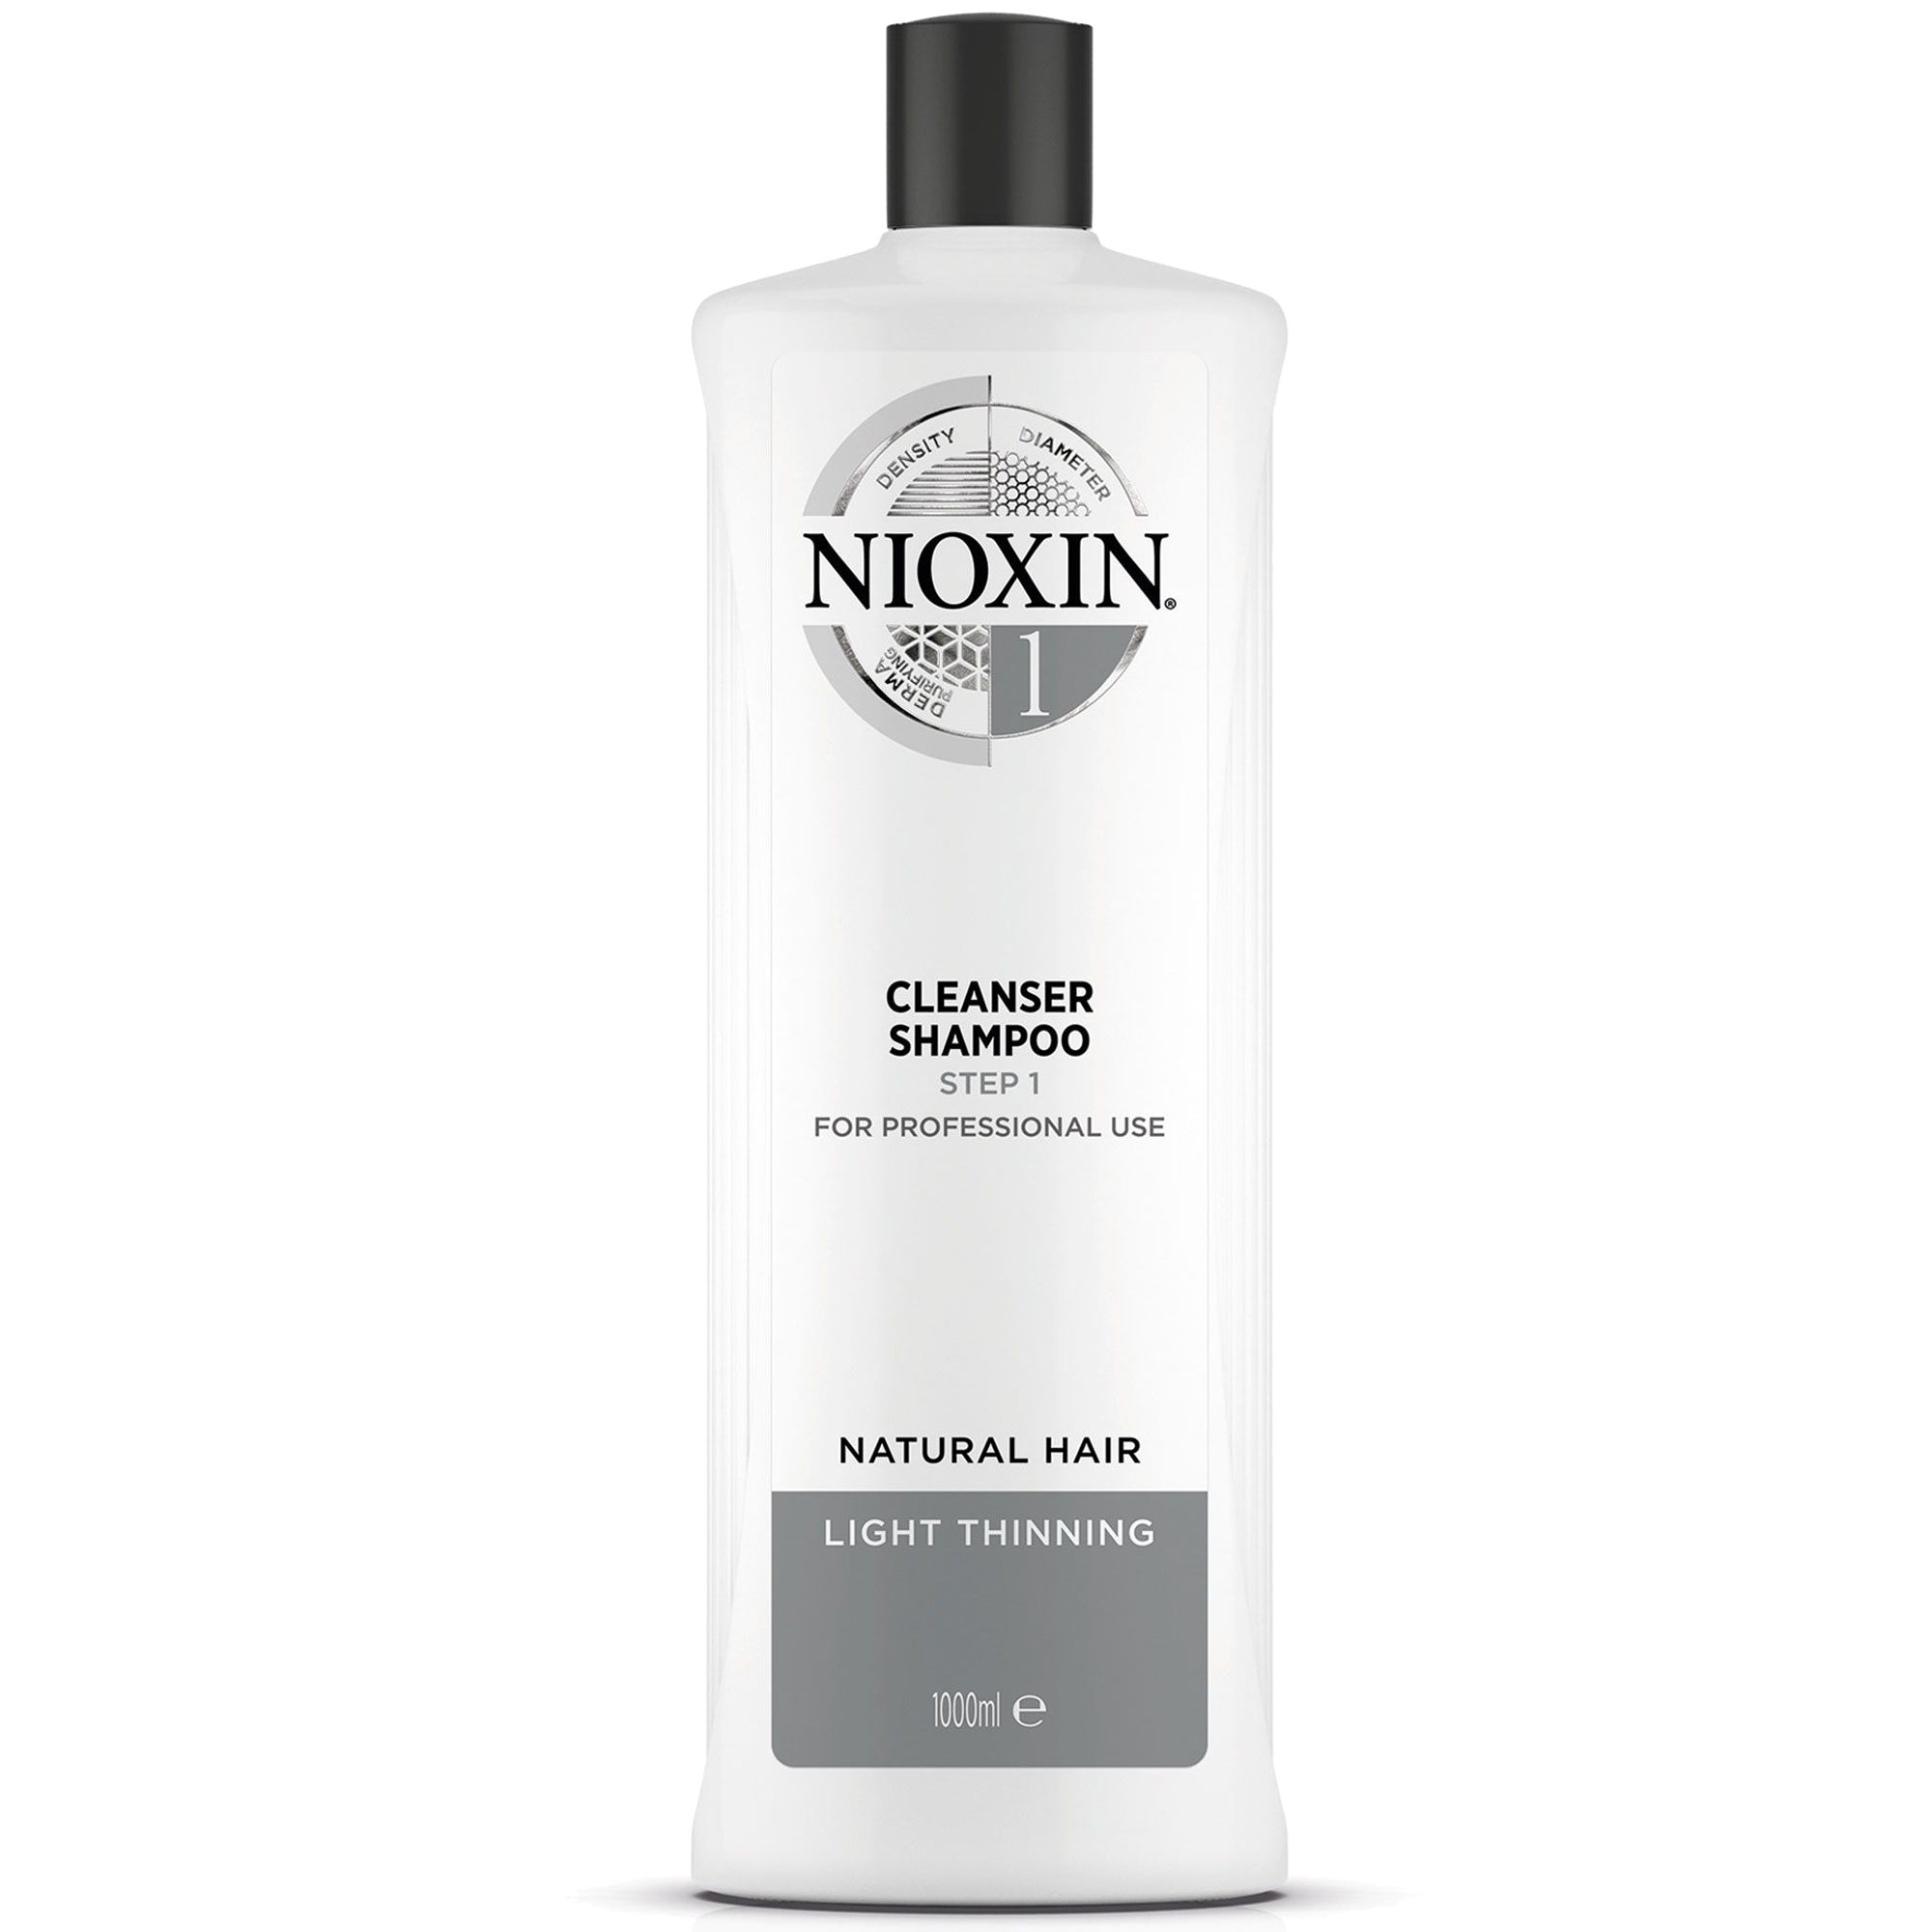 Nioxin шампунь System 3 Cleanser 1000 ml. Nioxin шампунь System 3 Cleanser Step 1, 300 мл. Шампунь Nioxin Cleanser System 5 1000 мл. Nioxin очищающий шампунь (система 1) 300мл. System shampoo